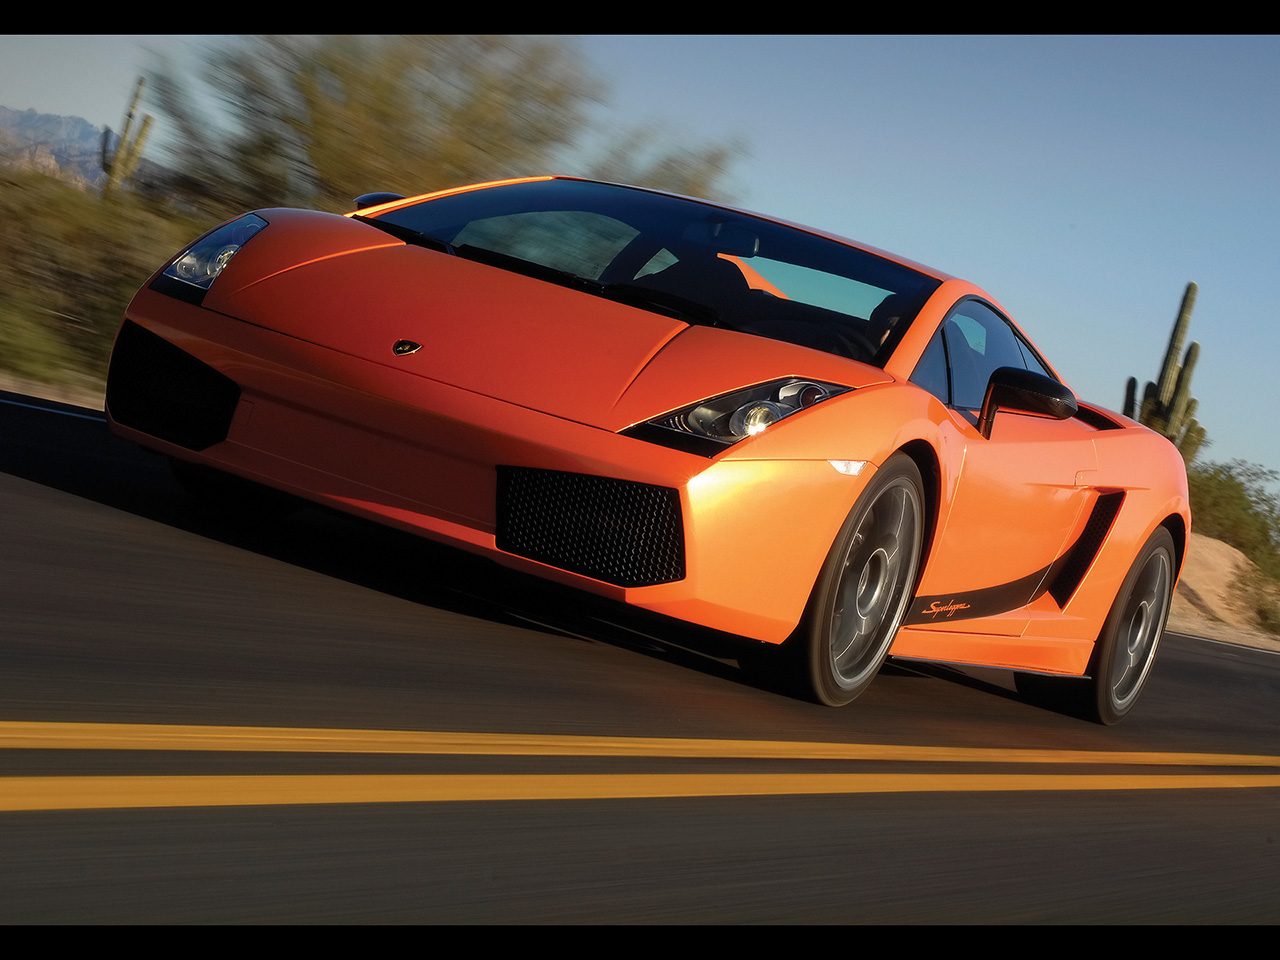 2007-Lamborghini-Gallardo-Superleggera-Orange-Front-Angle-Speed-Tilt-1280x960.jpg